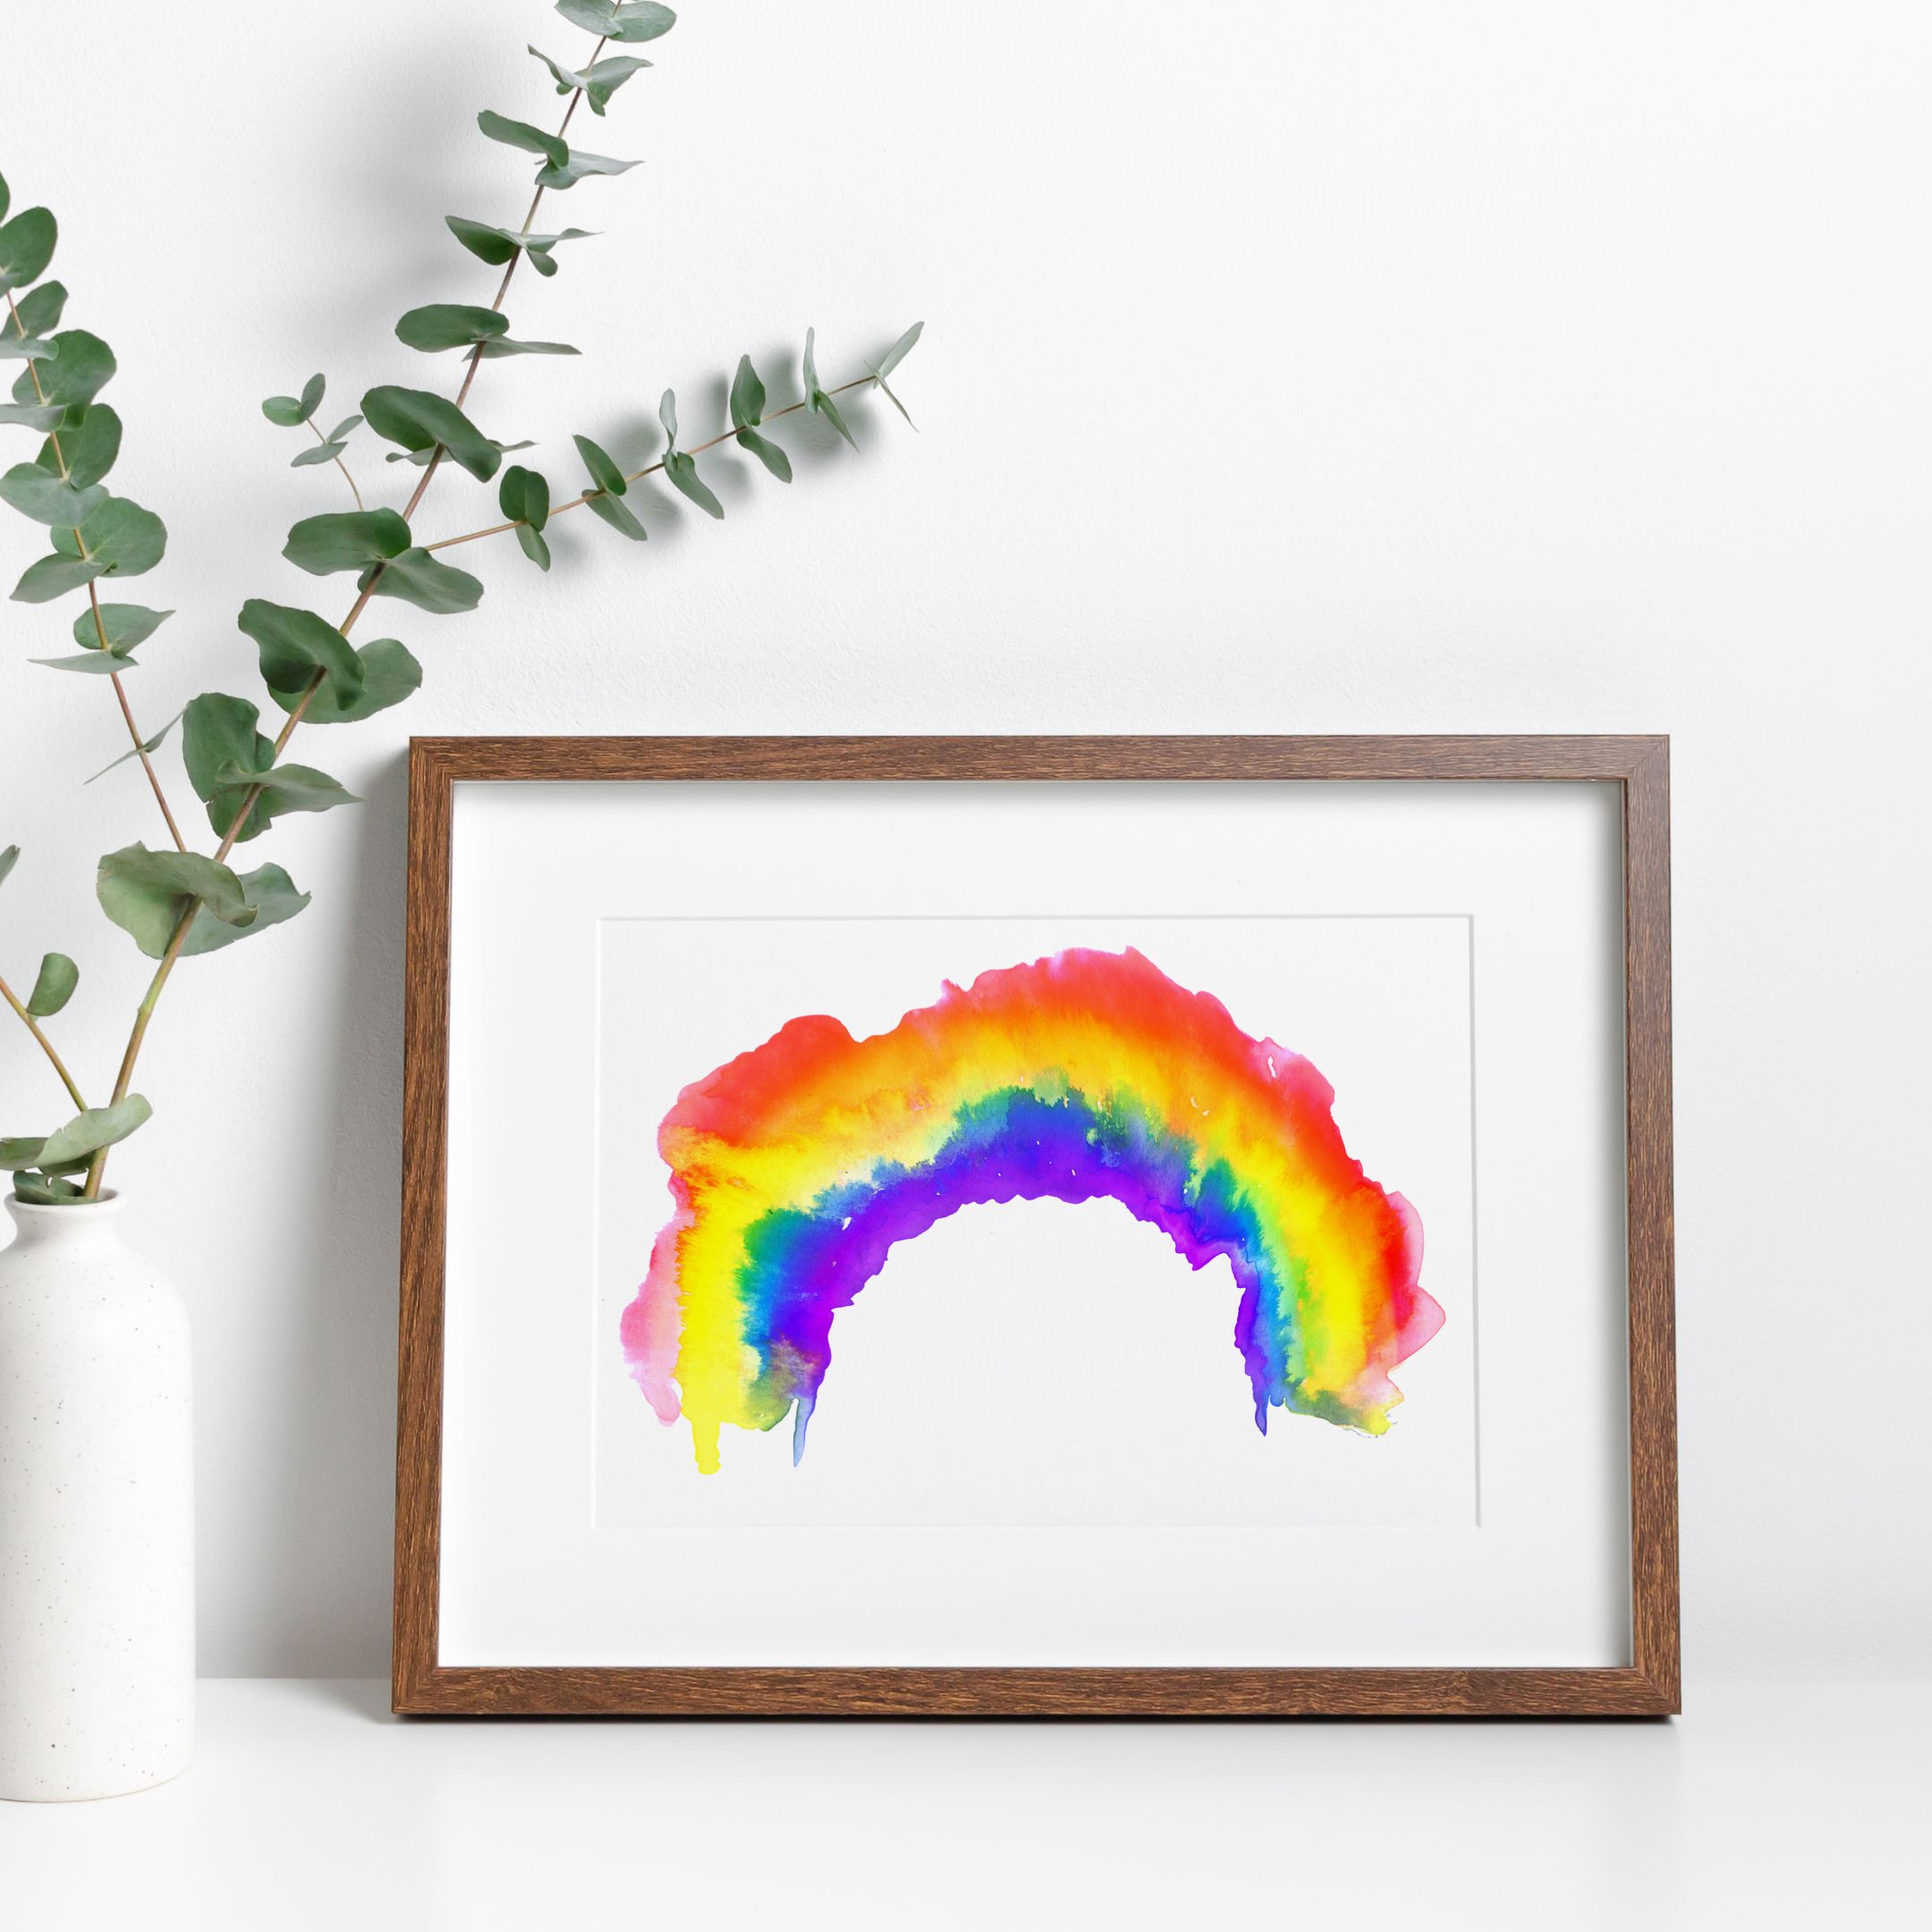 rainbow splash frame .jpg